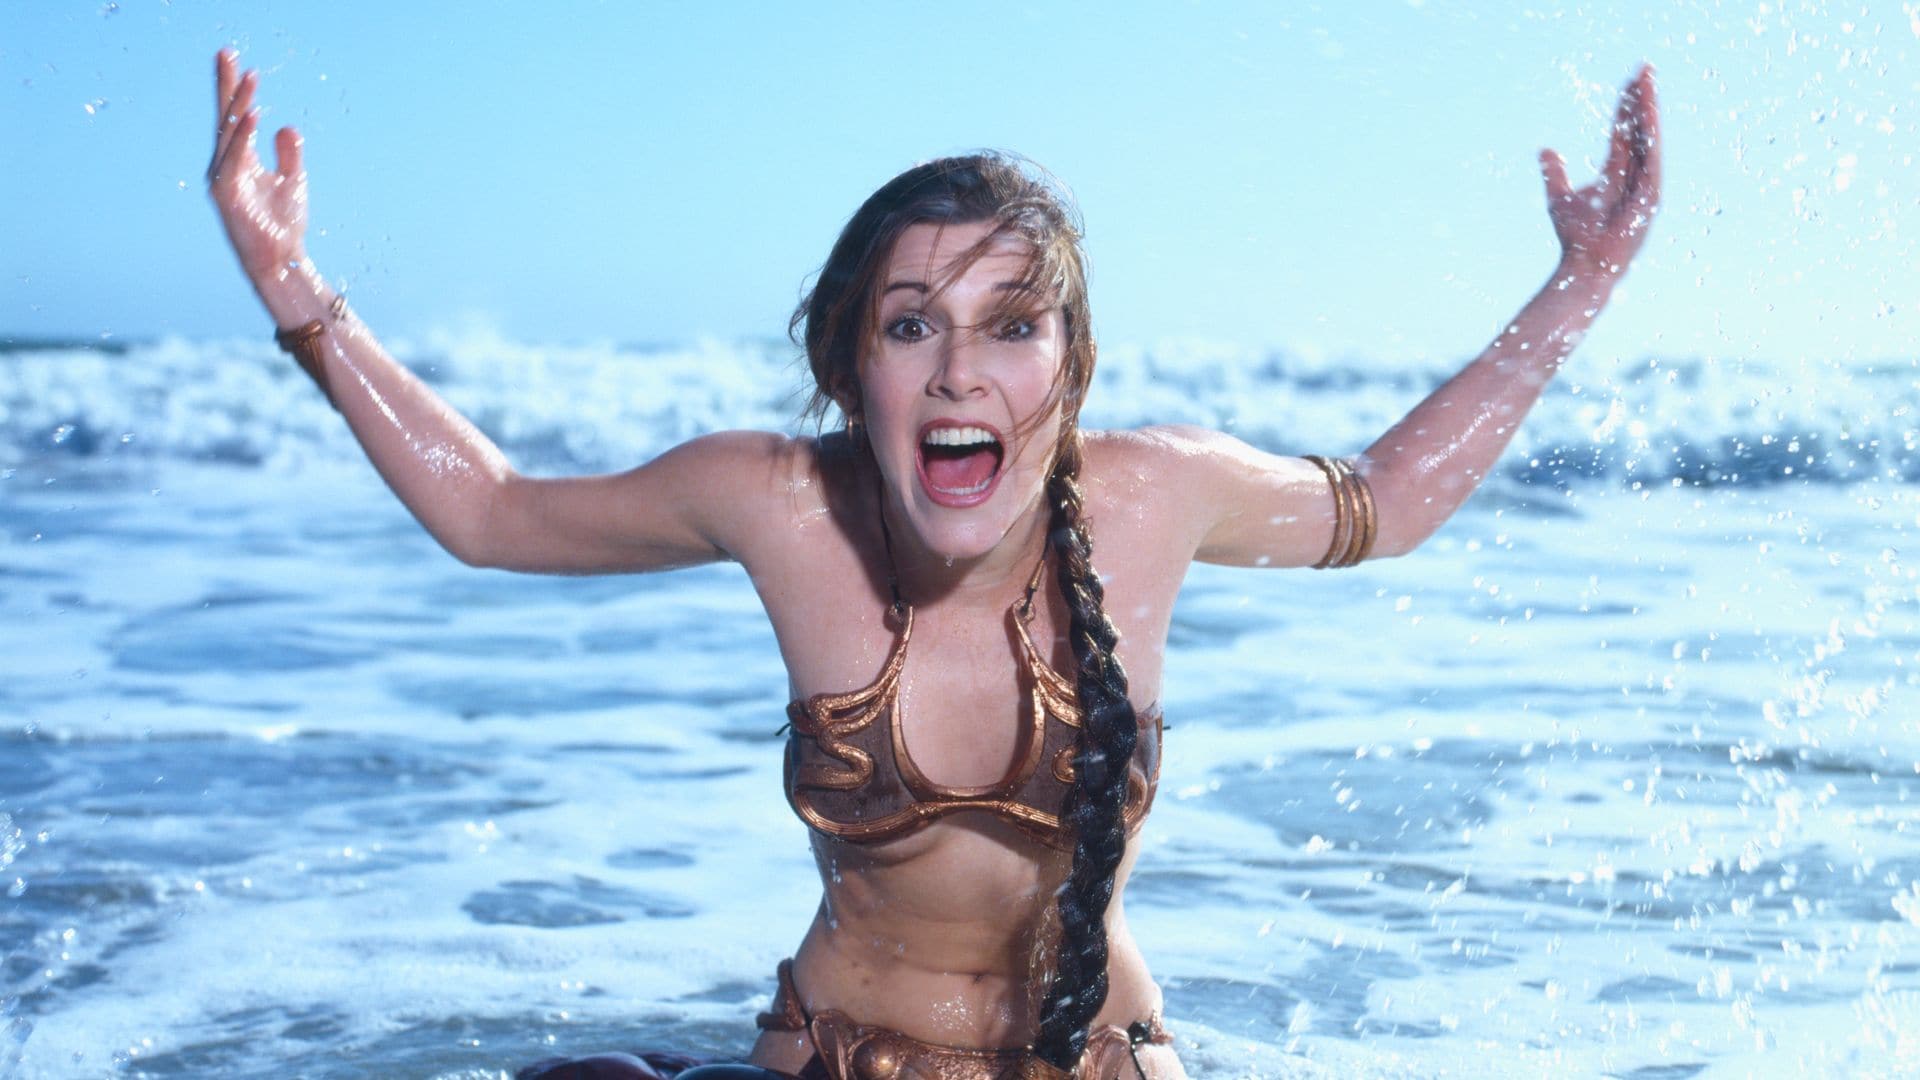 Princess Leia's iconic bikini goes on sale for thousands of dollars